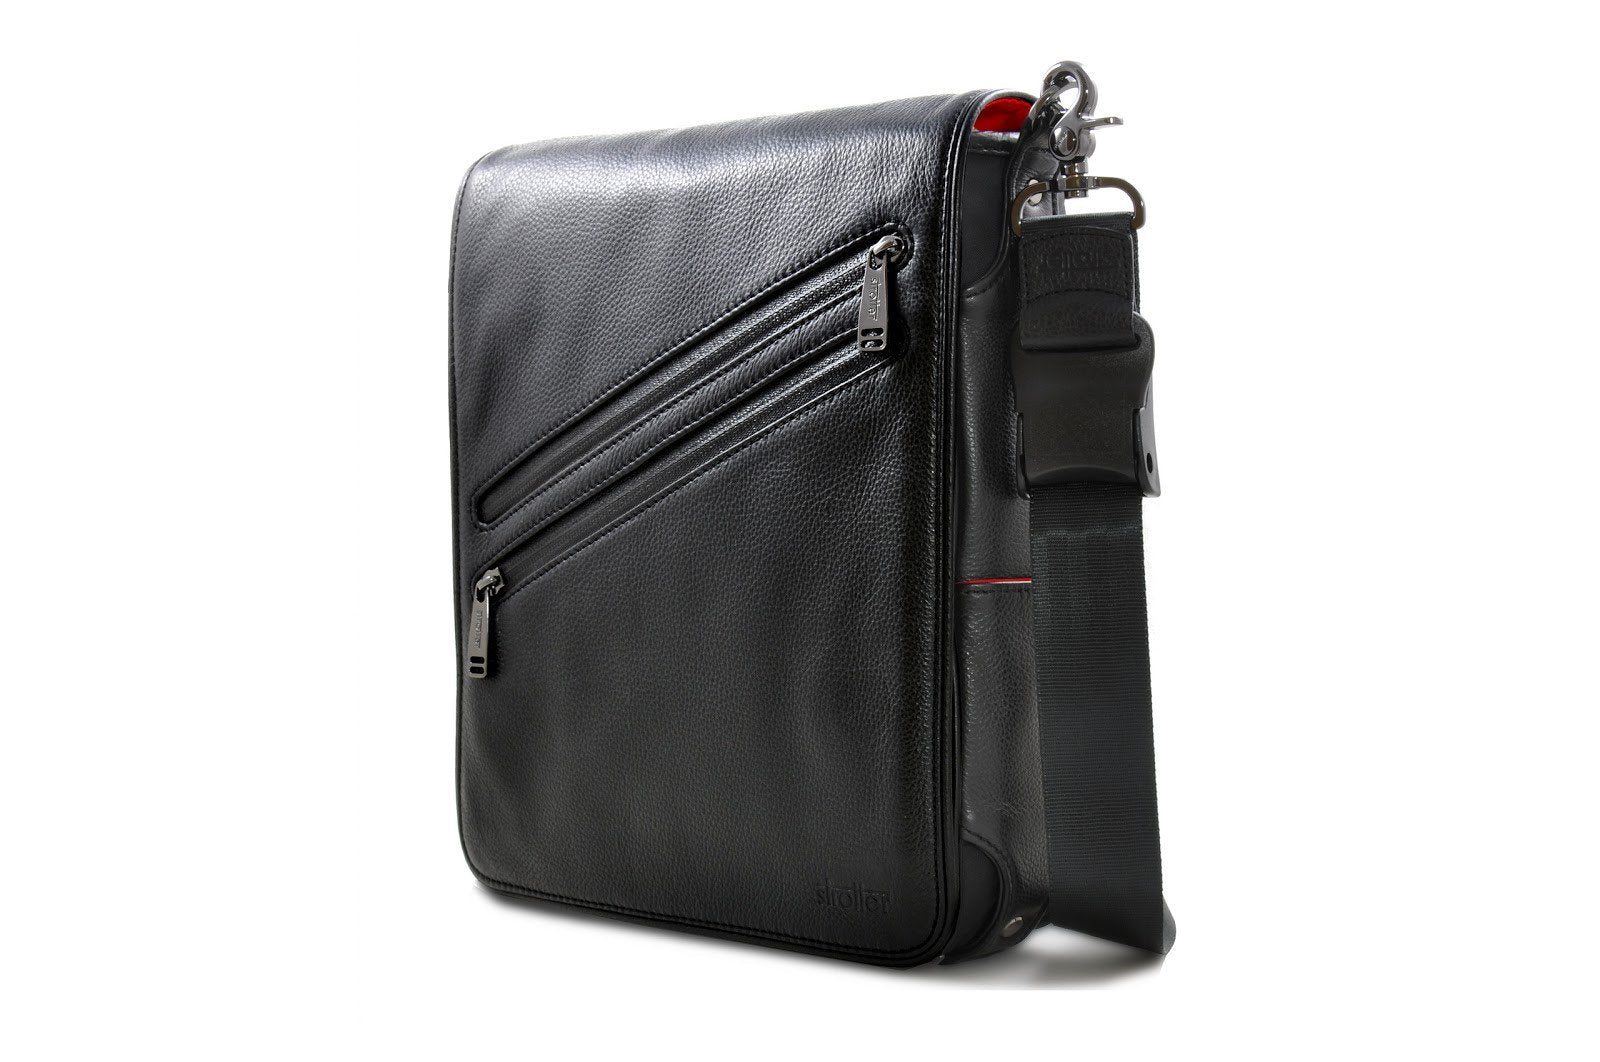 iPad leather messenger bag - Platforma G